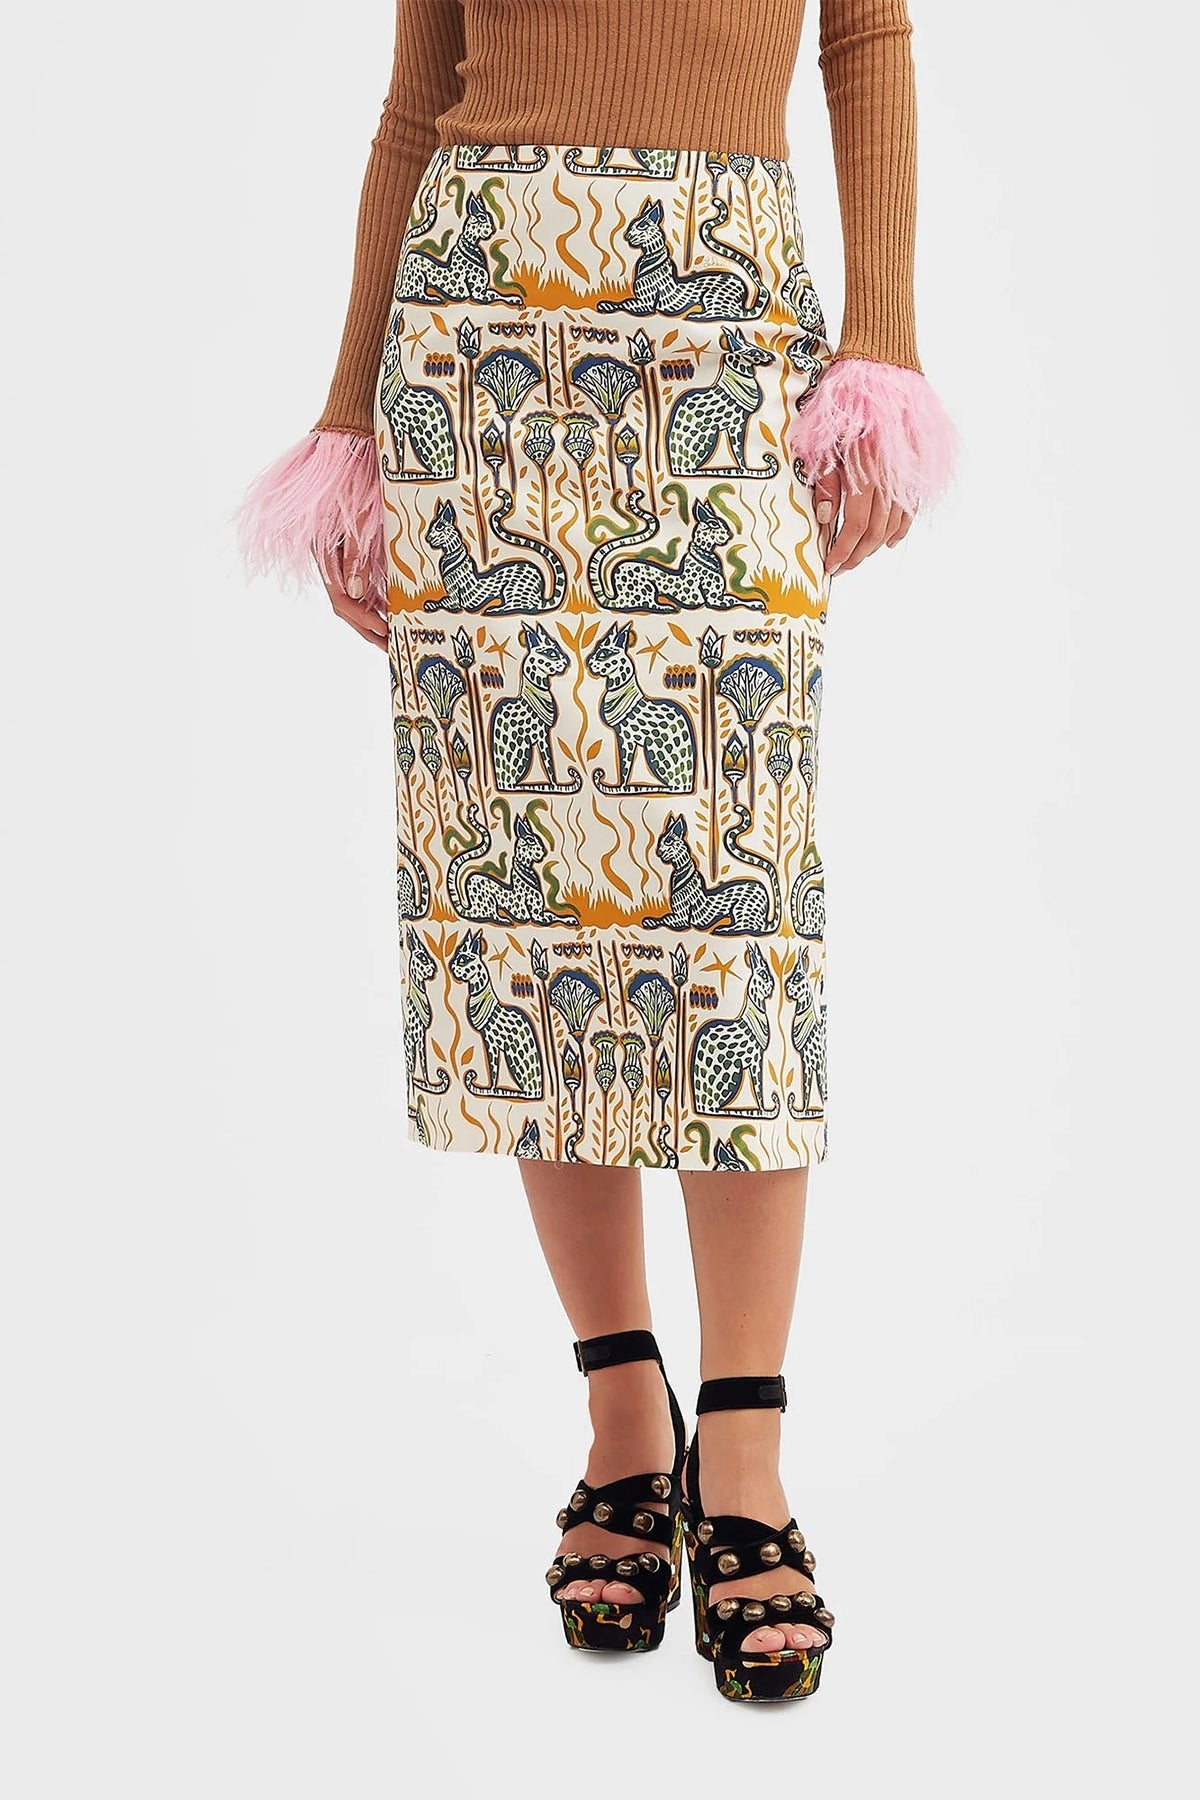 Pencil Skirt in Bast Ivory - shop-olivia.com